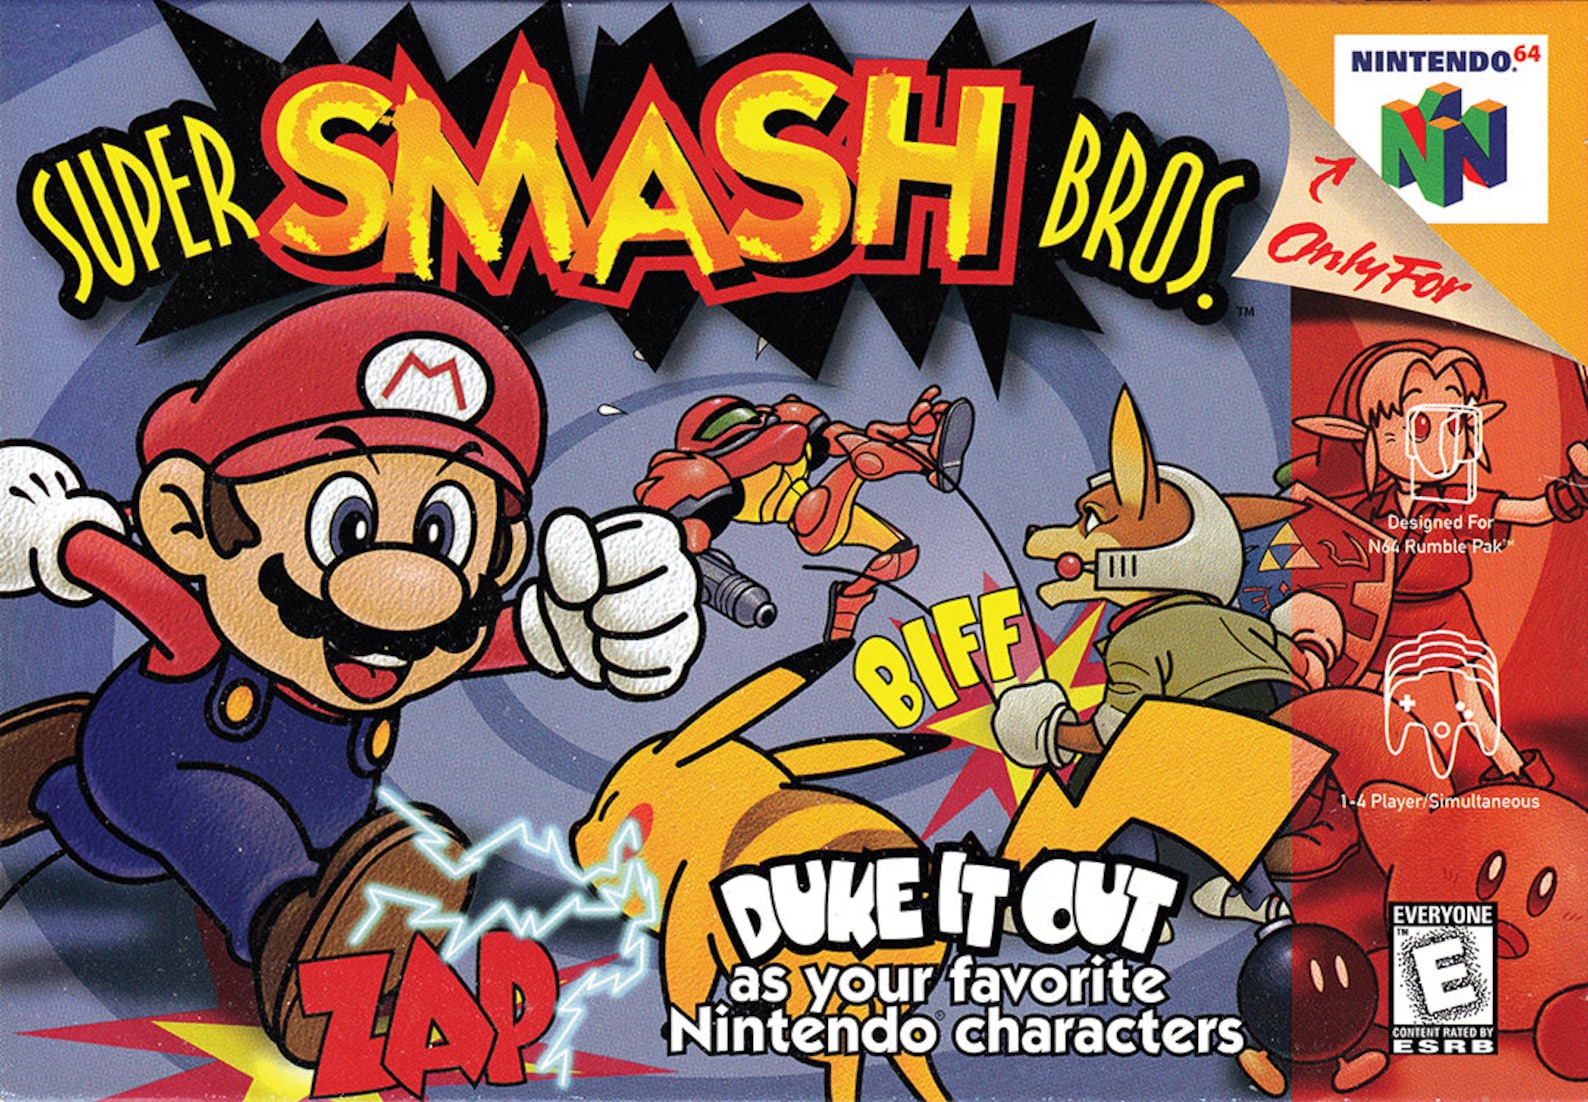 super-smash-bros-n64-box-art-poster-18x12-etsy